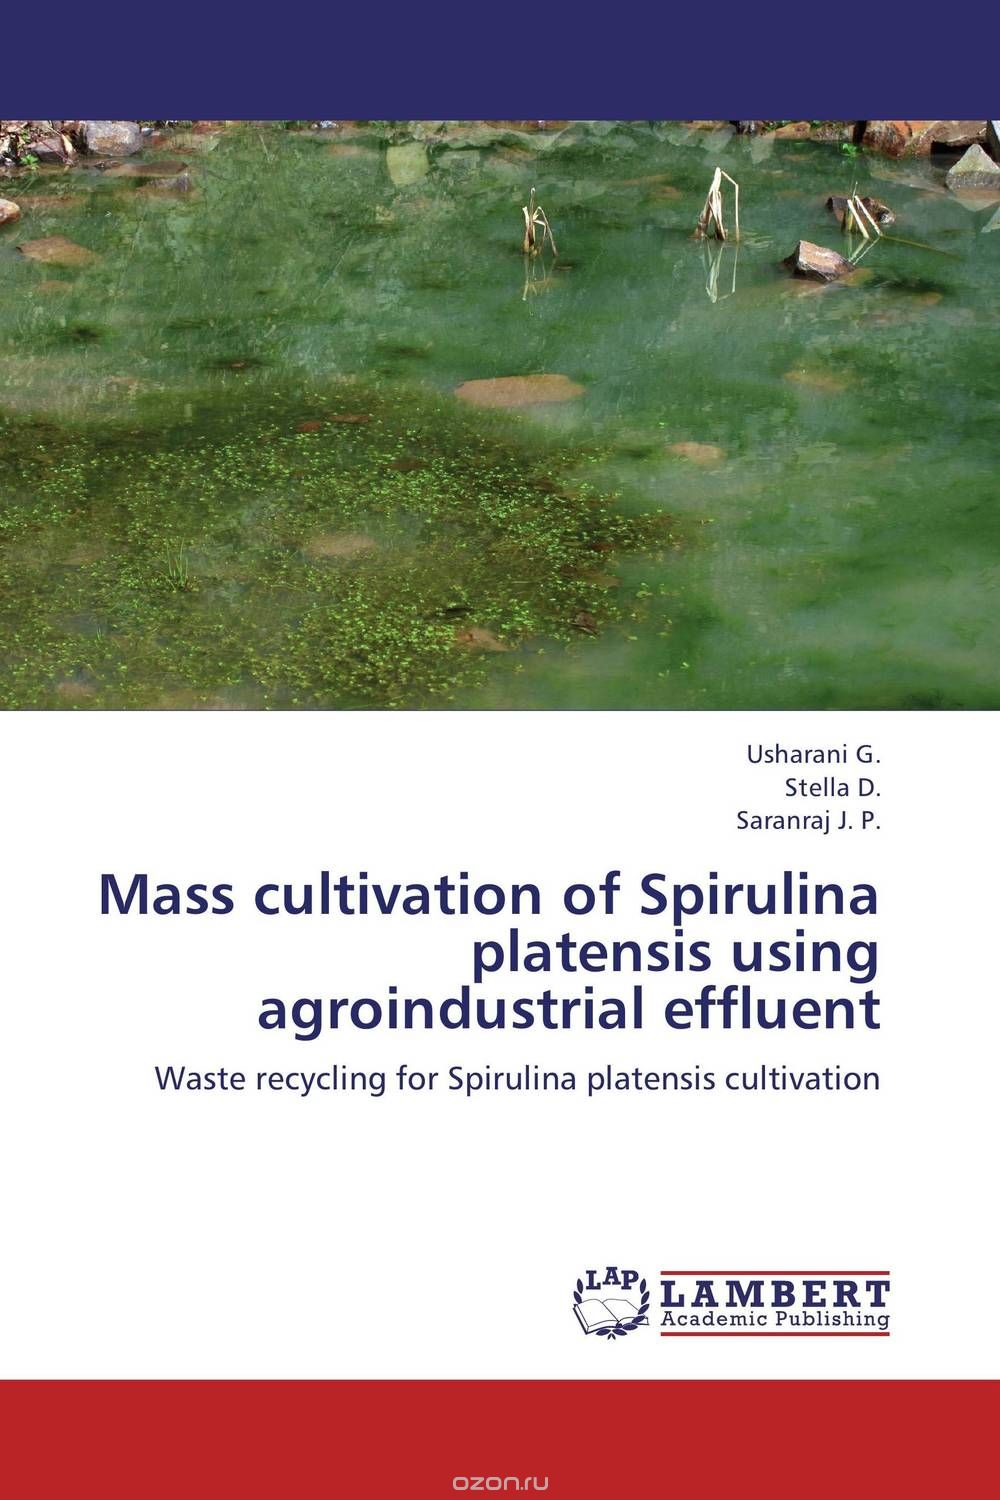 Скачать книгу "Mass cultivation of Spirulina platensis using agroindustrial effluent"